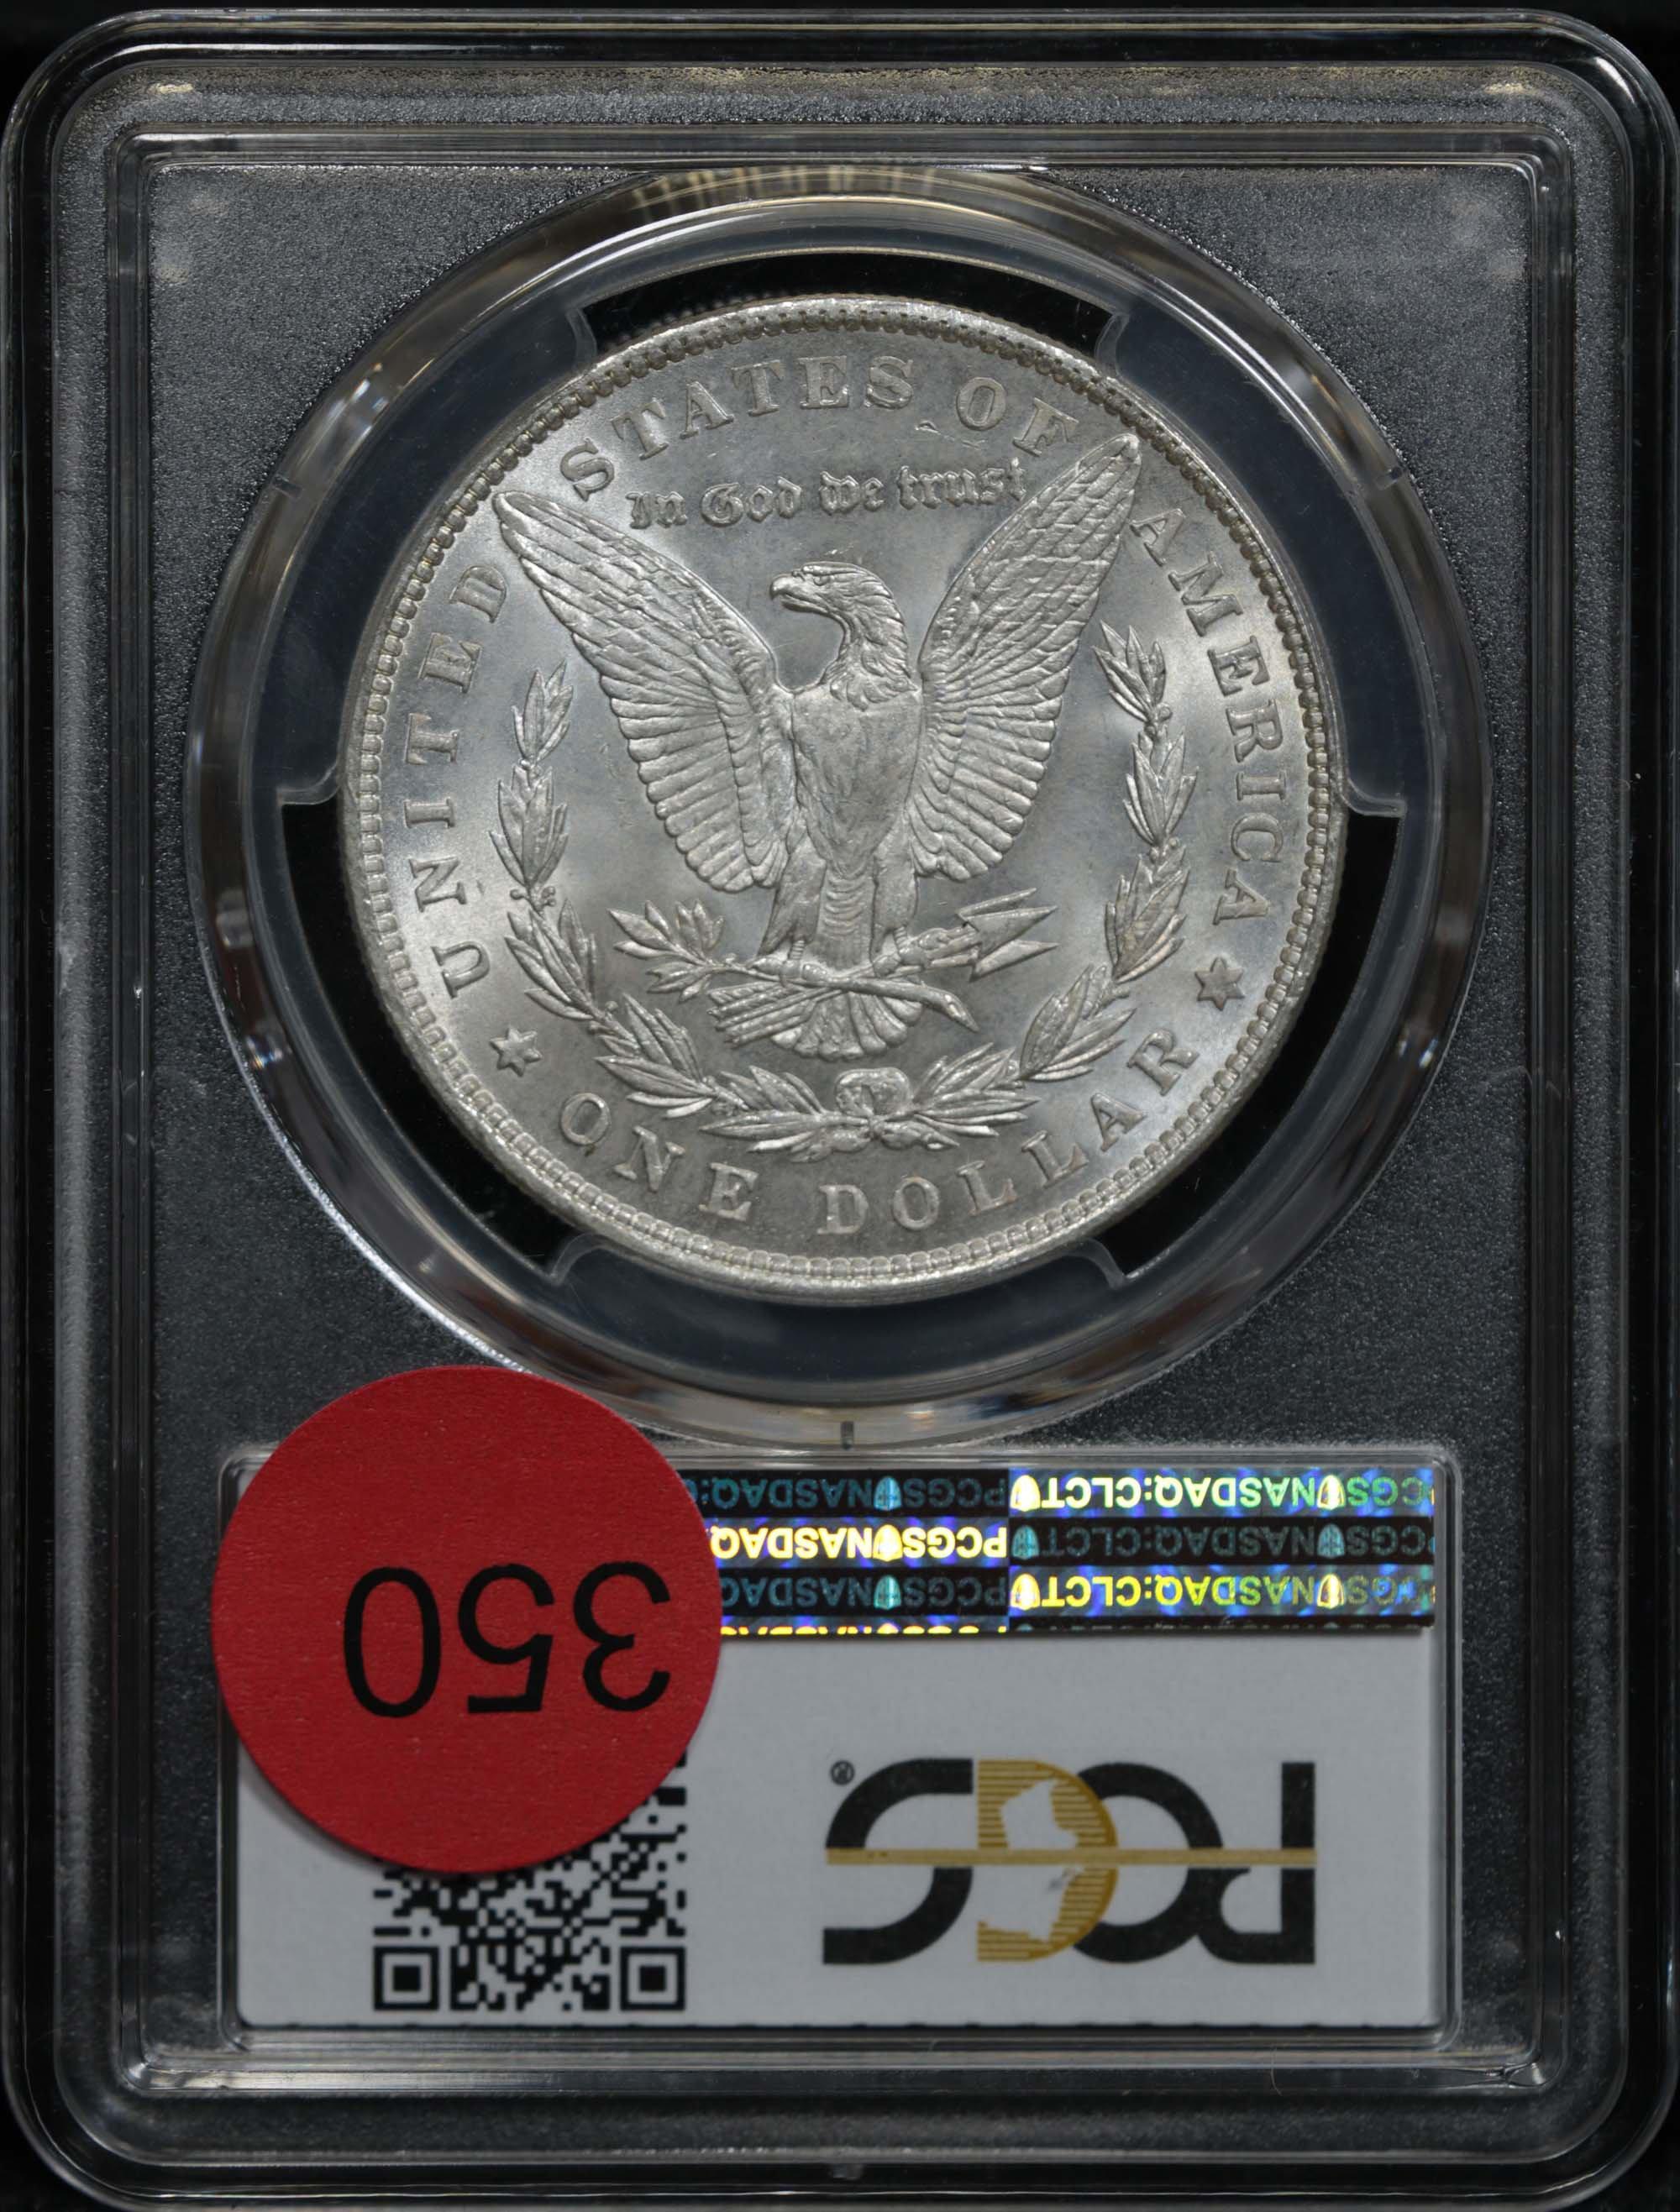 PCGS 1887-p Morgan Dollar $1 Graded ms65 by PCGS